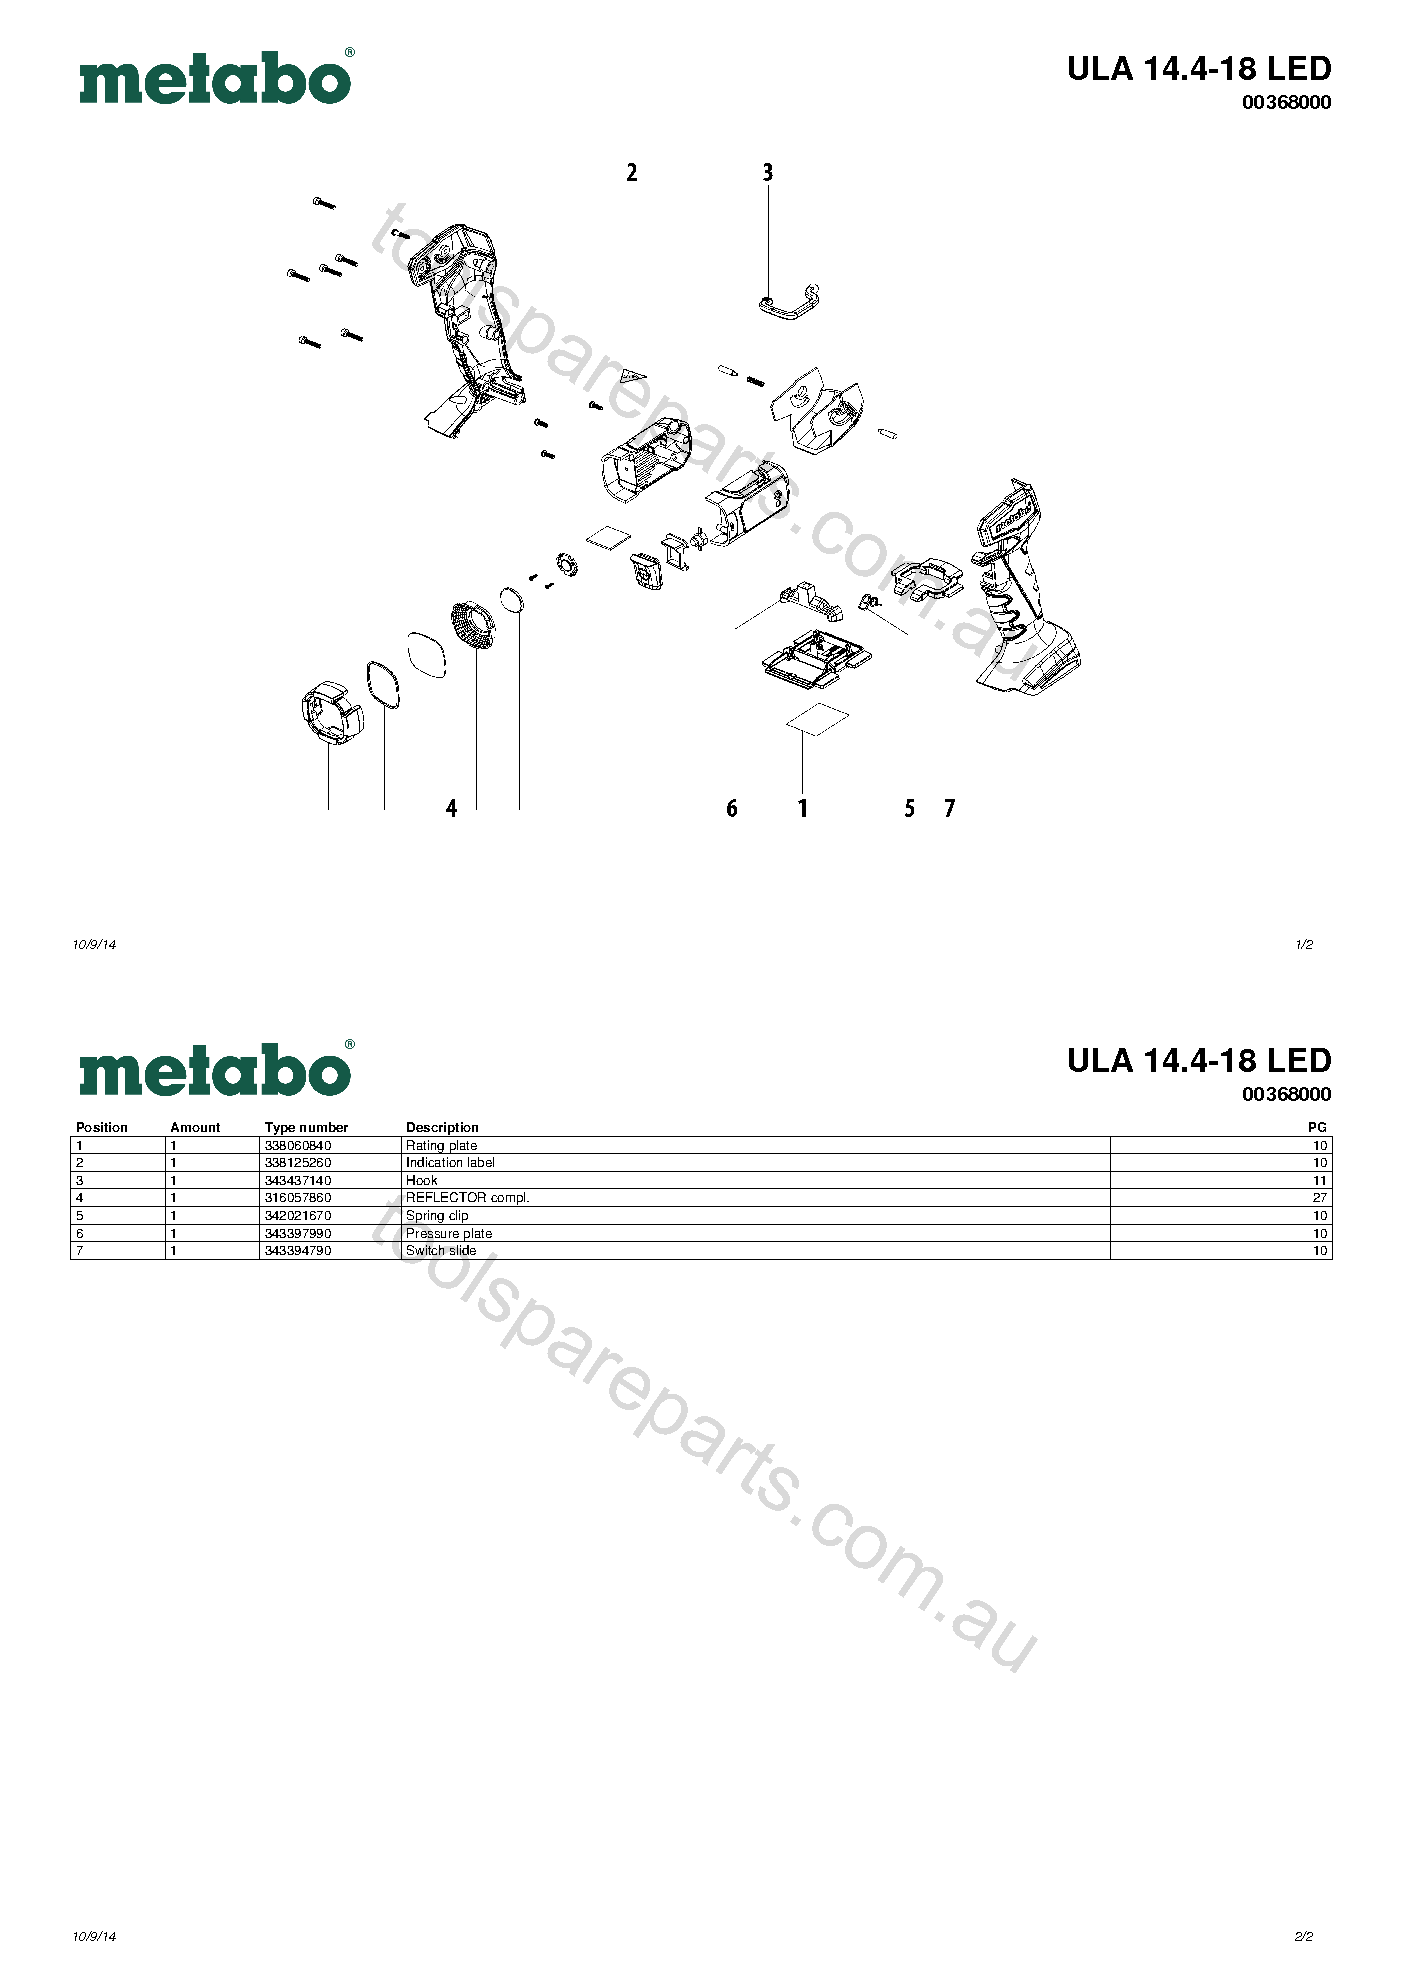 Metabo ULA 14.4-18 LED 00368000  Diagram 1